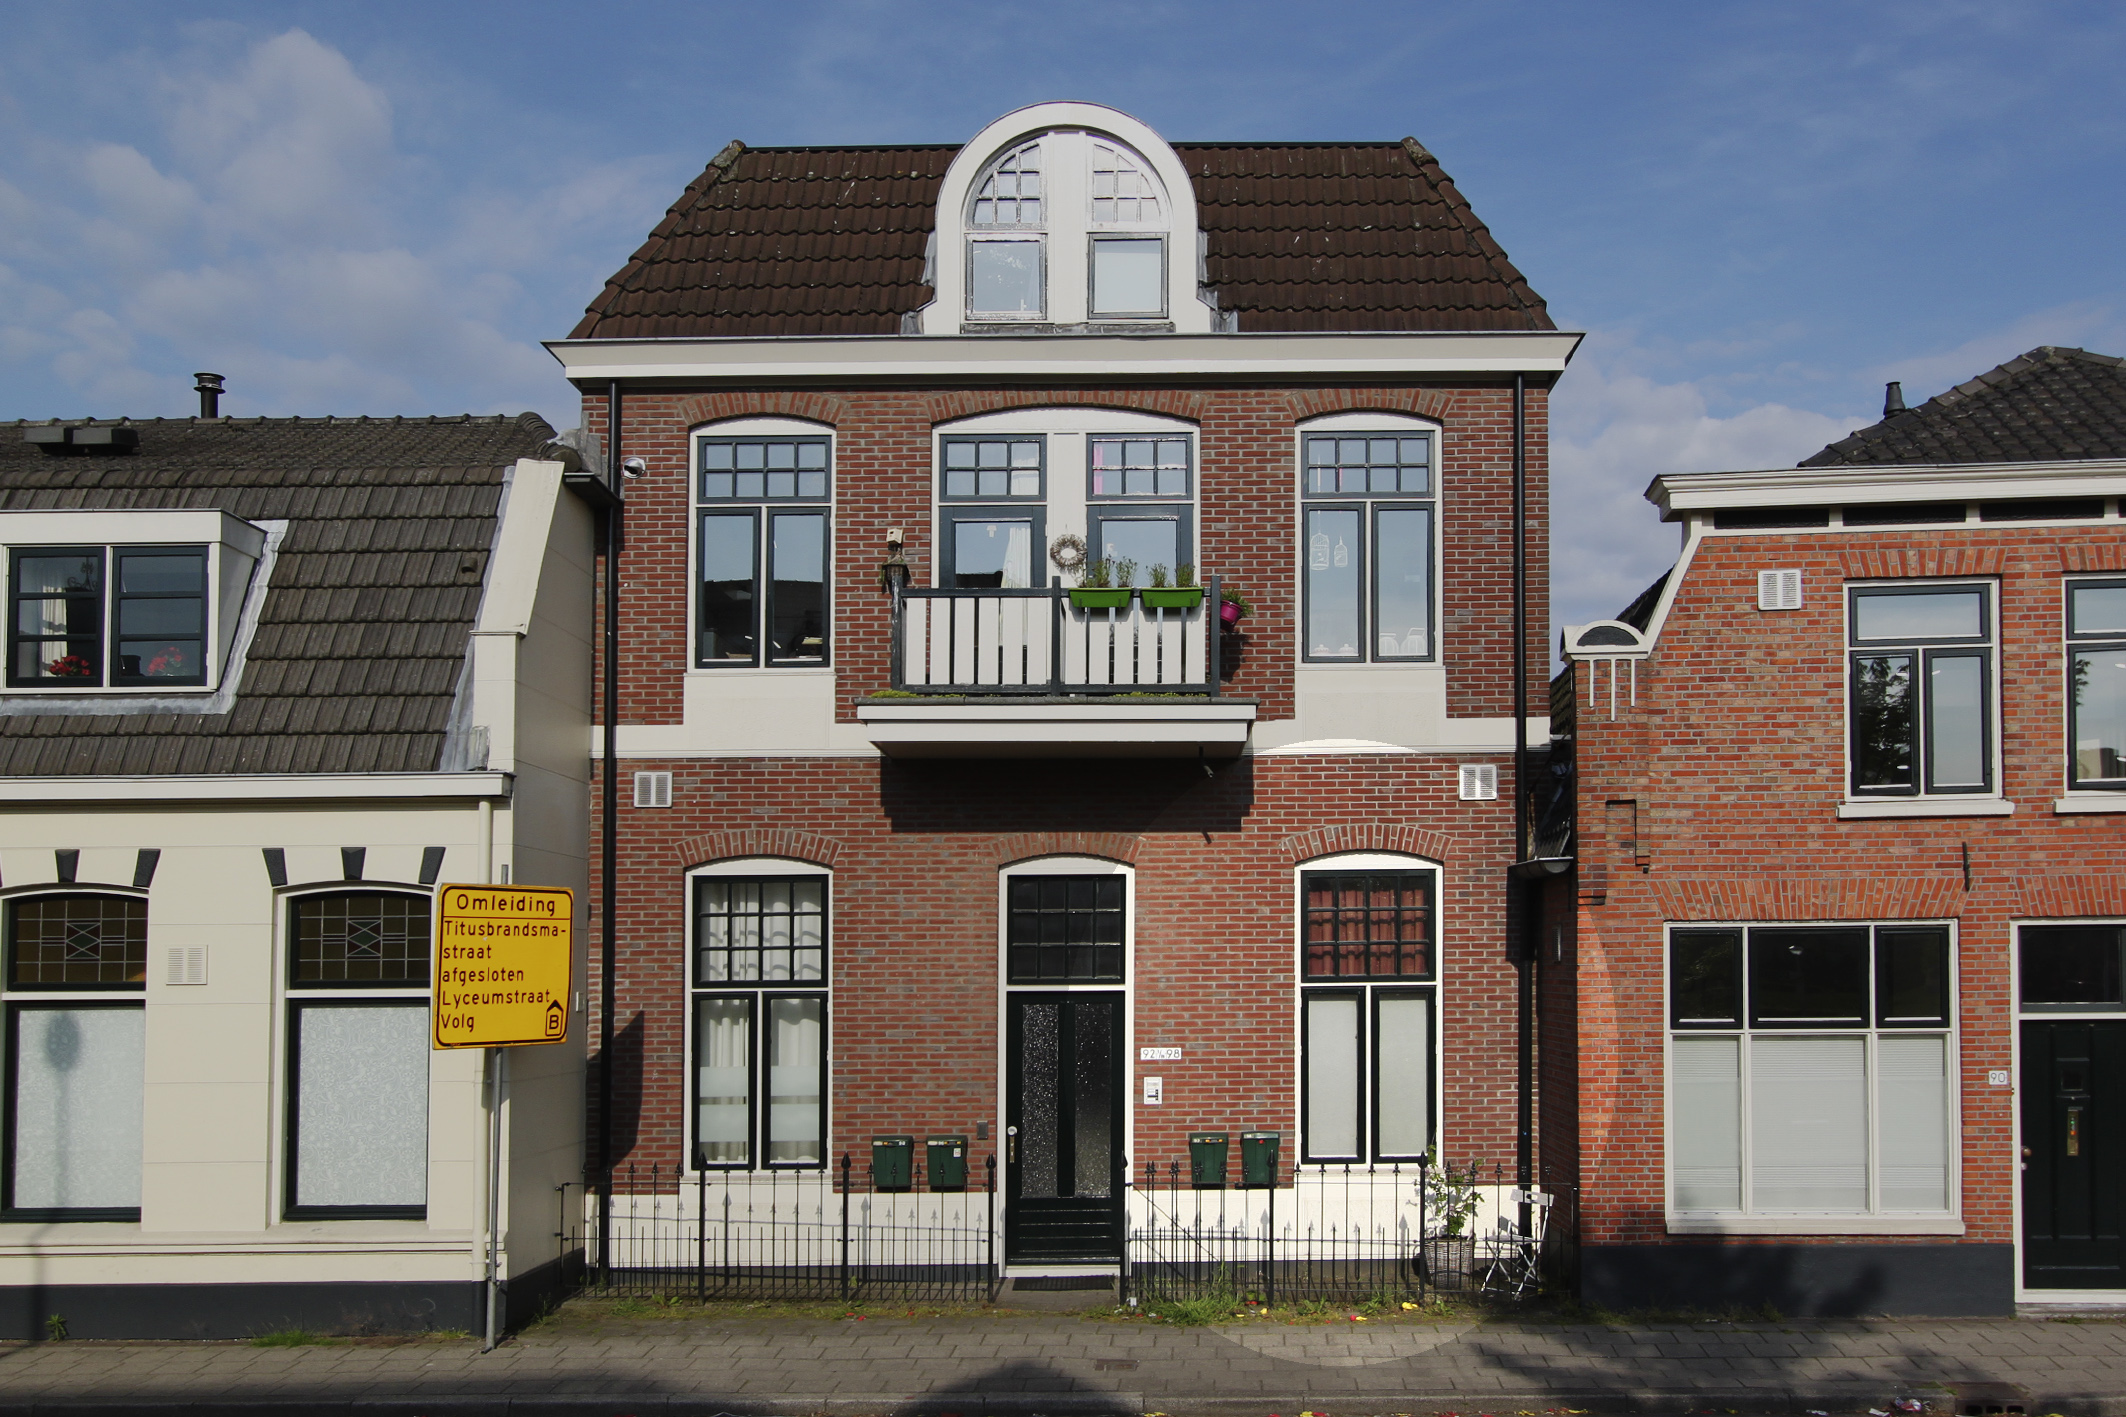 Steenstraat 92, 7571 BL Oldenzaal, Nederland